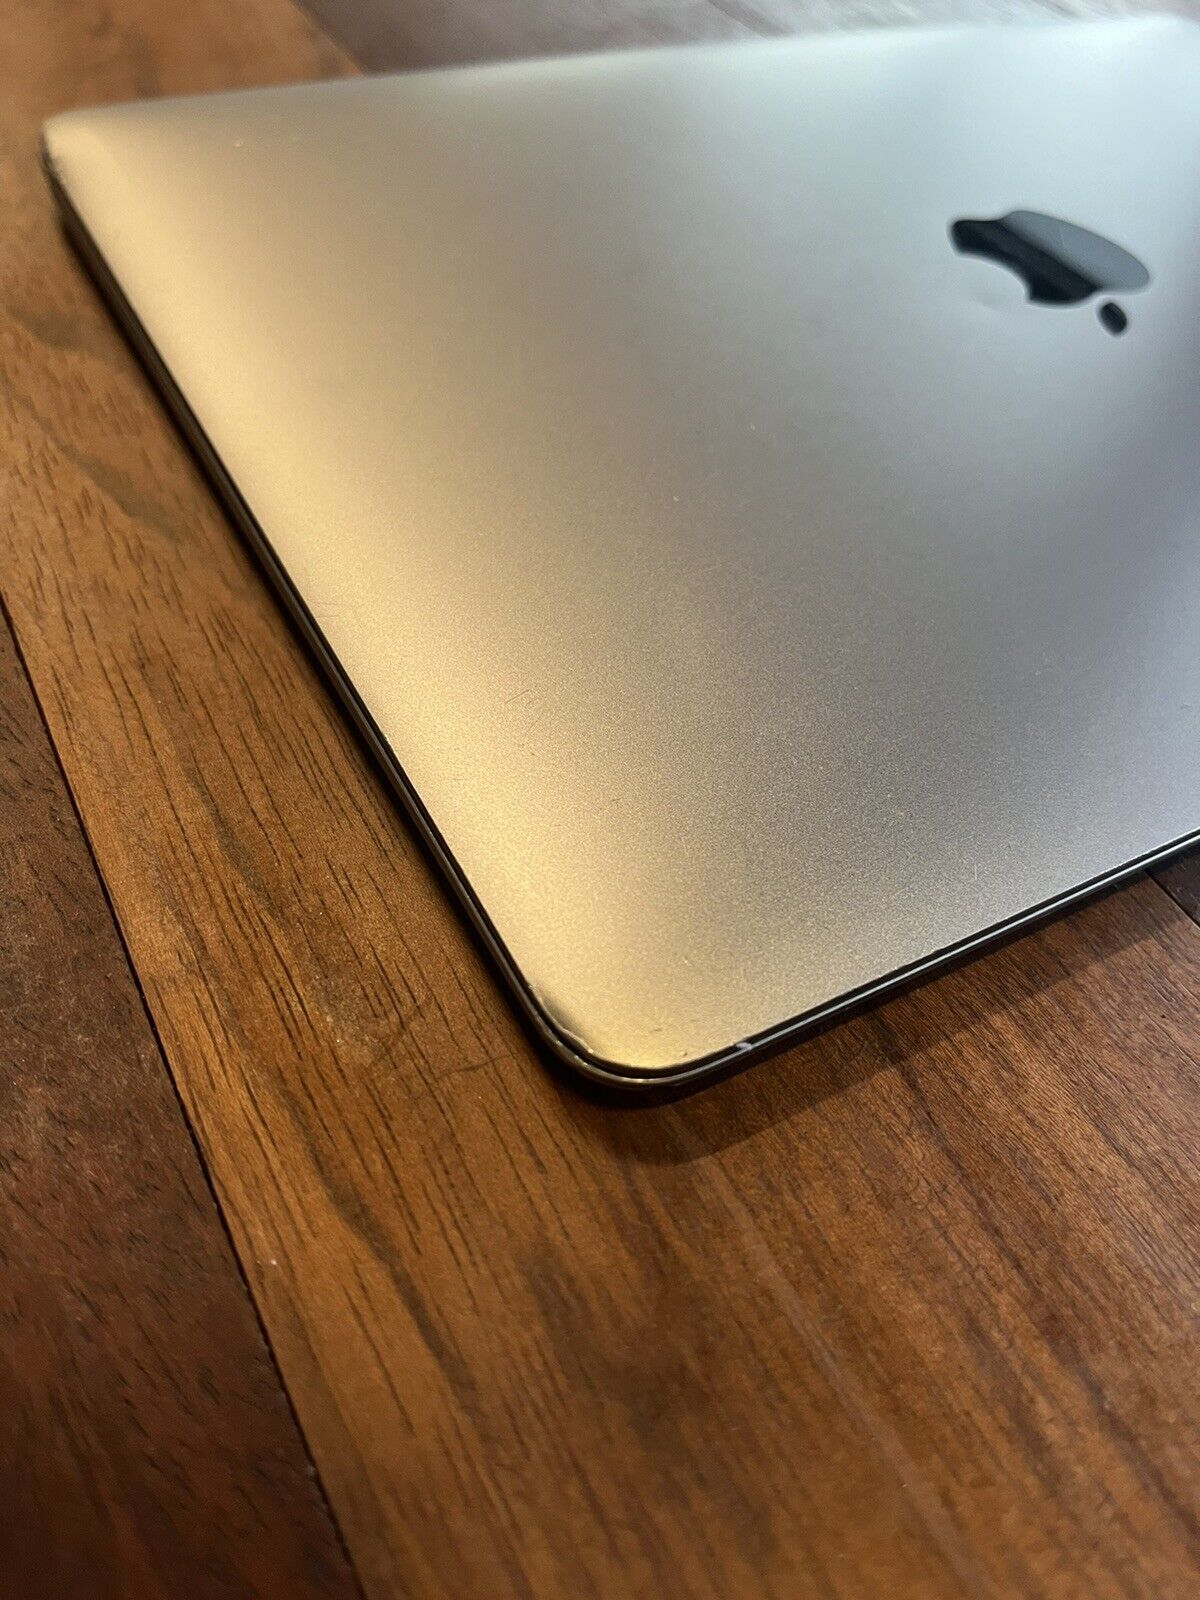 Apple MacBook 12inch 2017 Space Grey | eBay